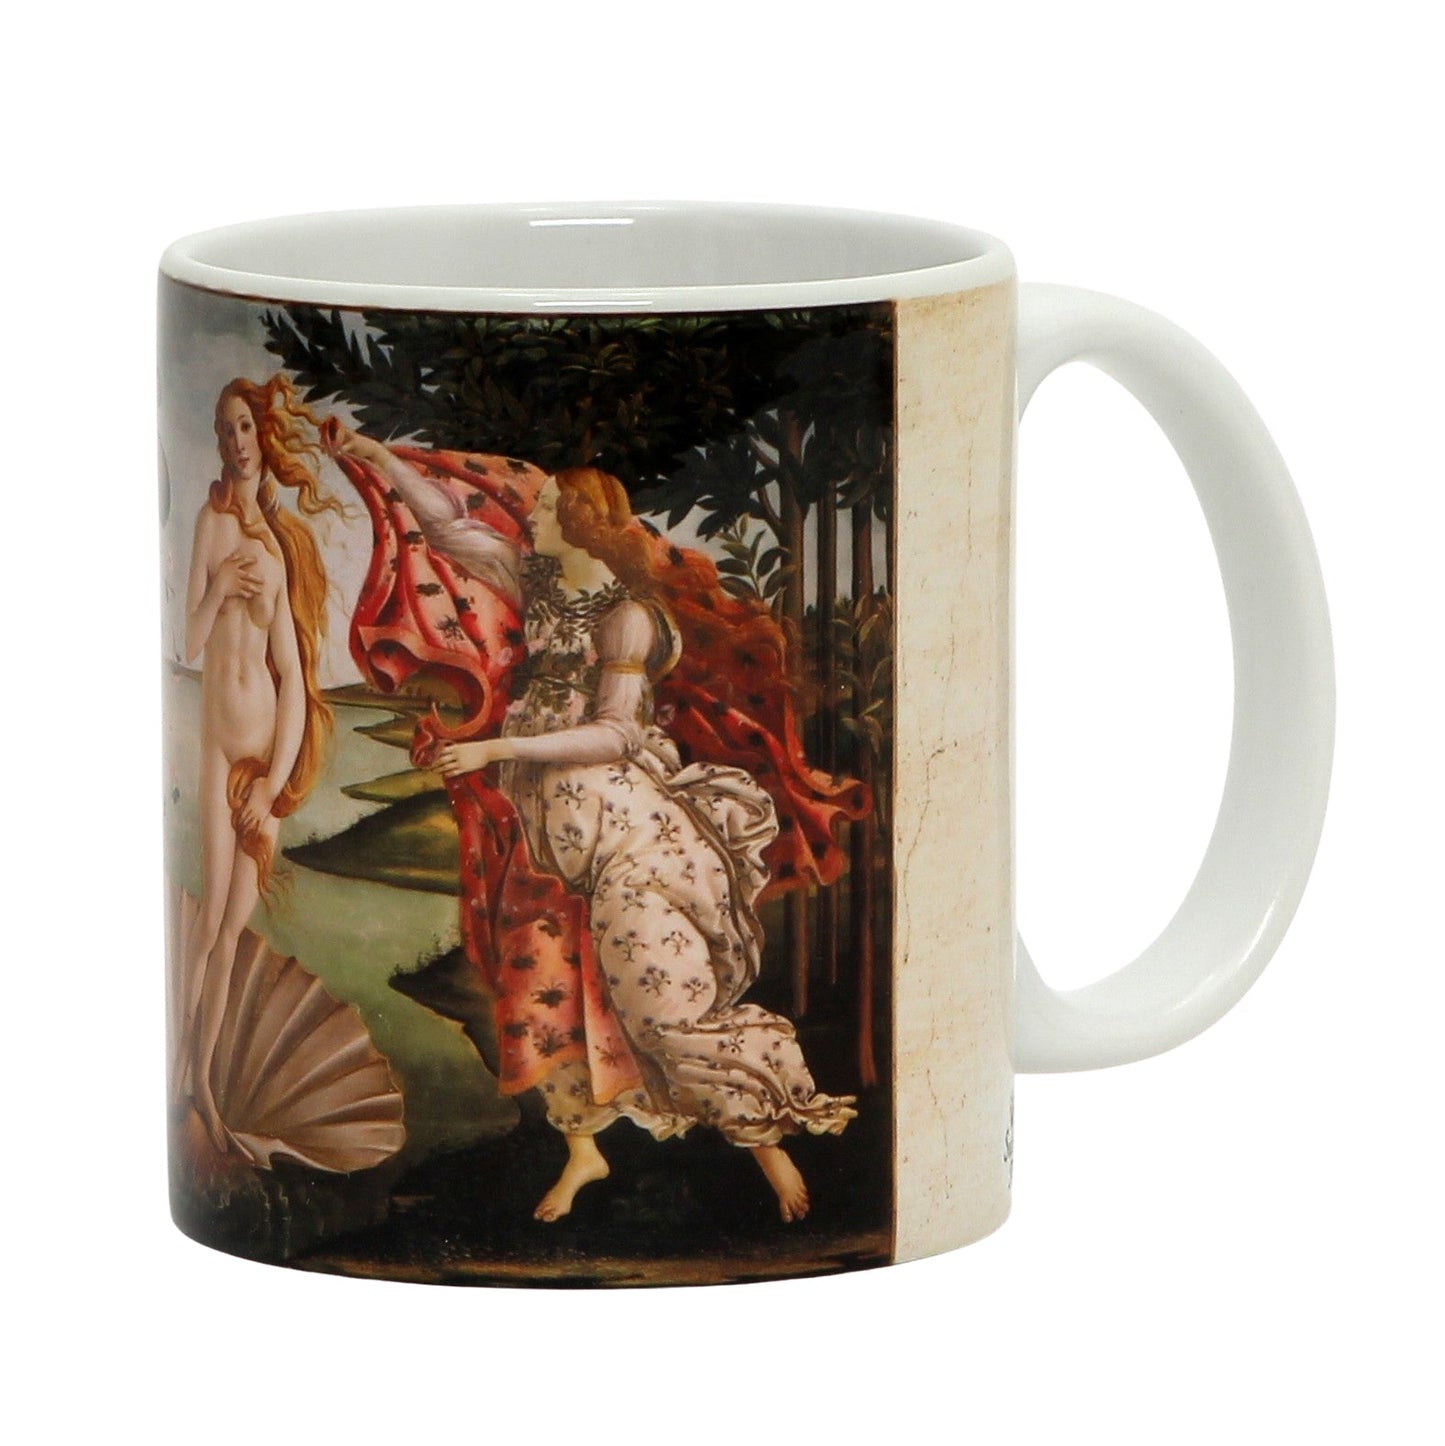 SUBLIMART: Affresco Mug - La Nascita di Venere (Botticelli) (Botticelli's The Birth of Venus)